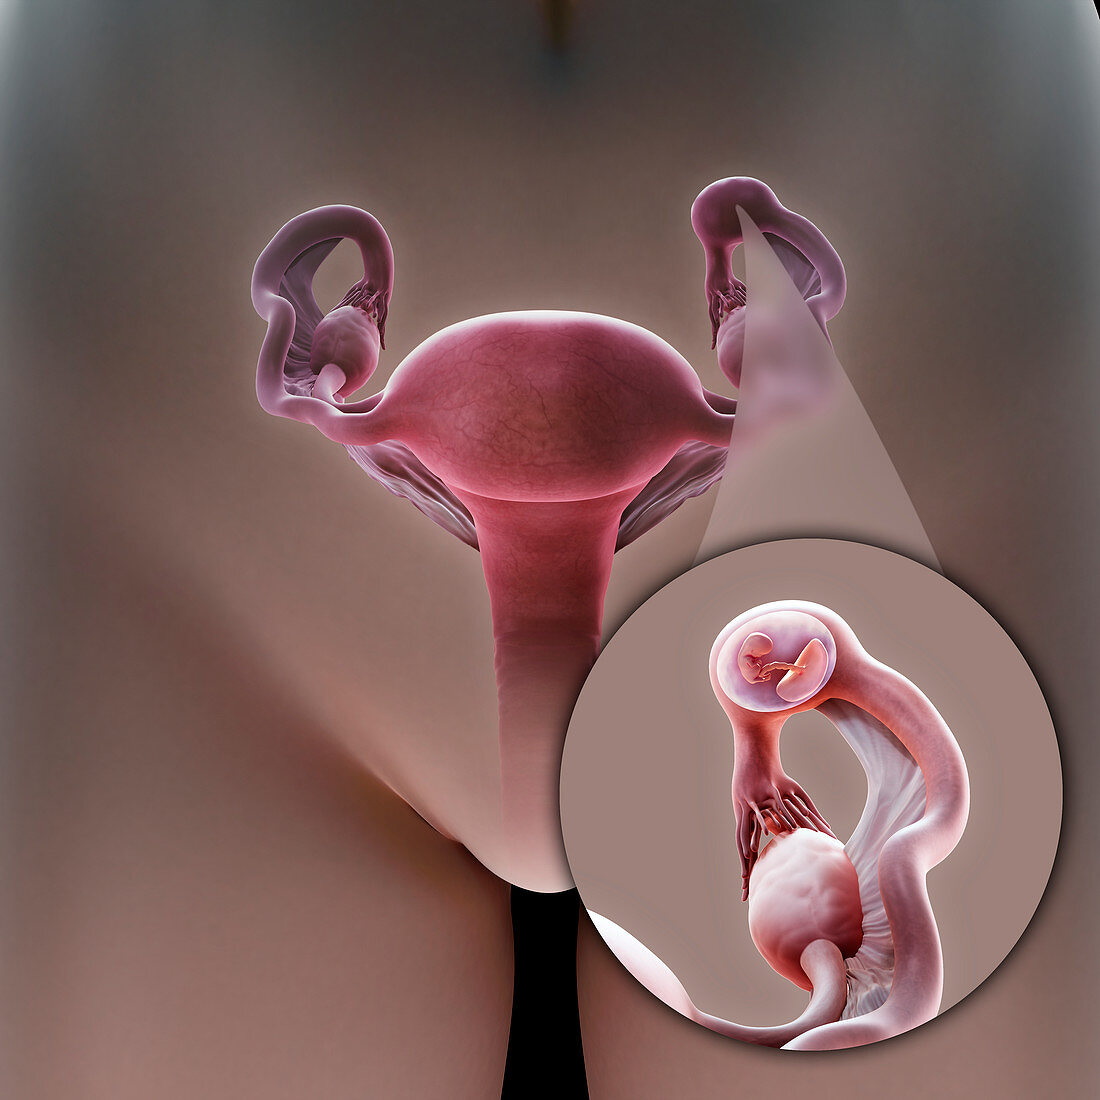 Ectopic Pregnancy, illustration